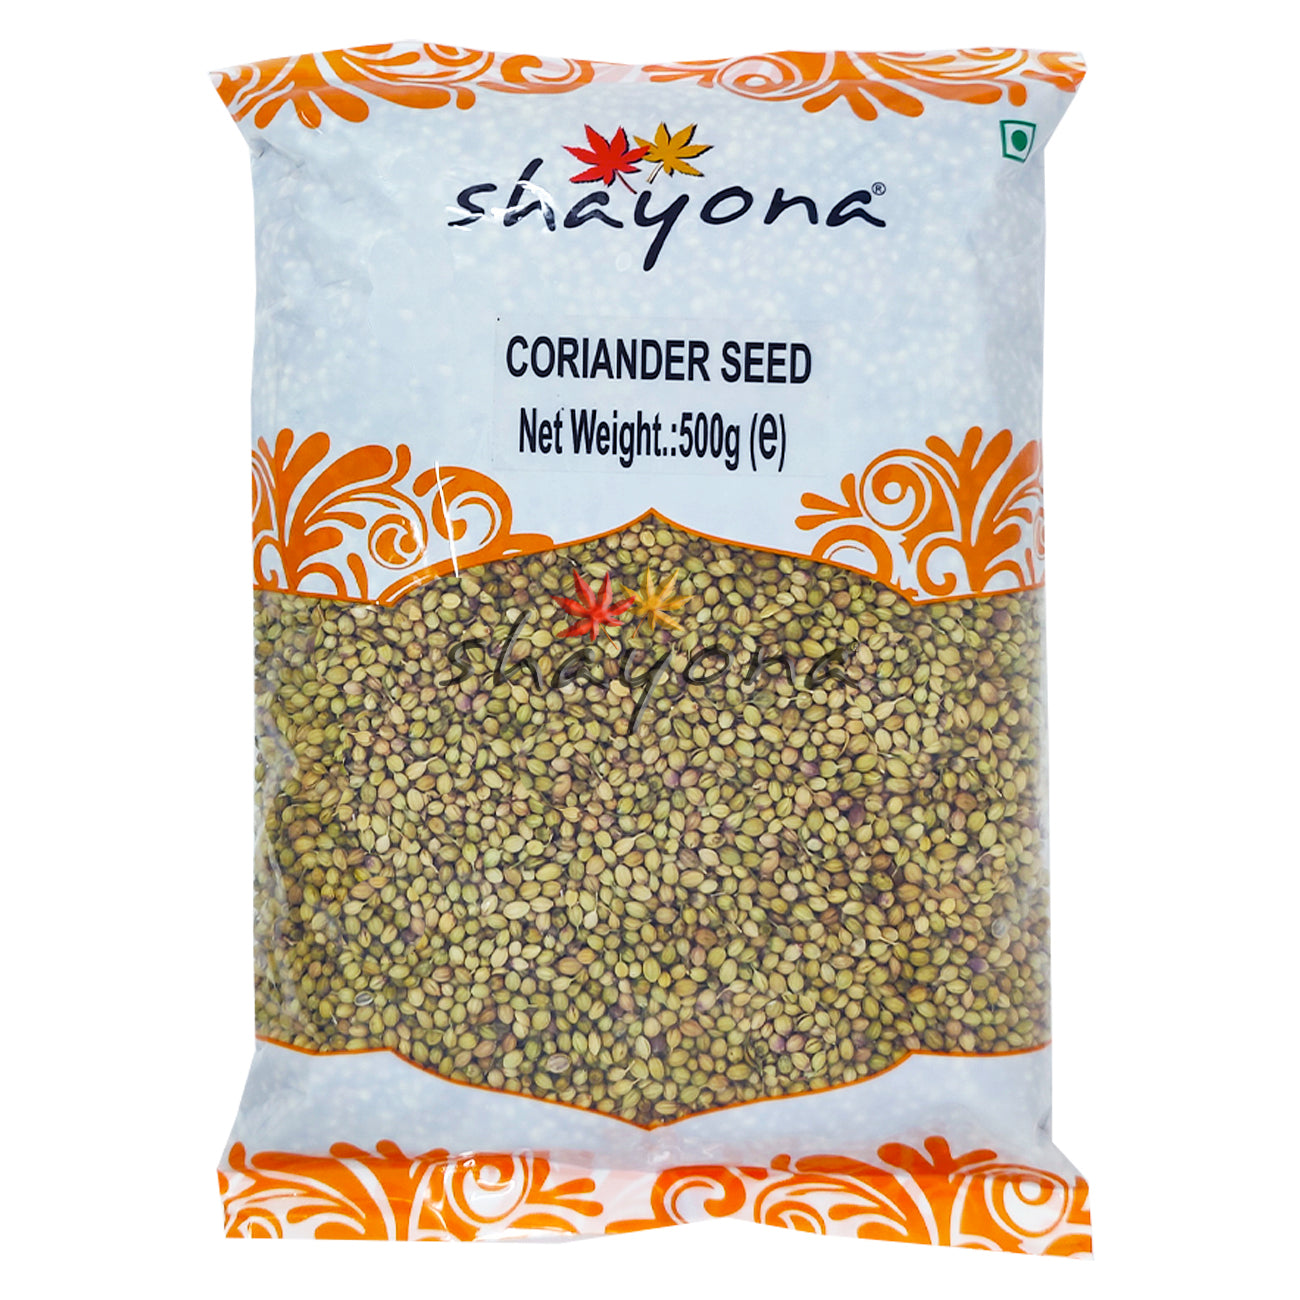 Shayona Coriander Seeds